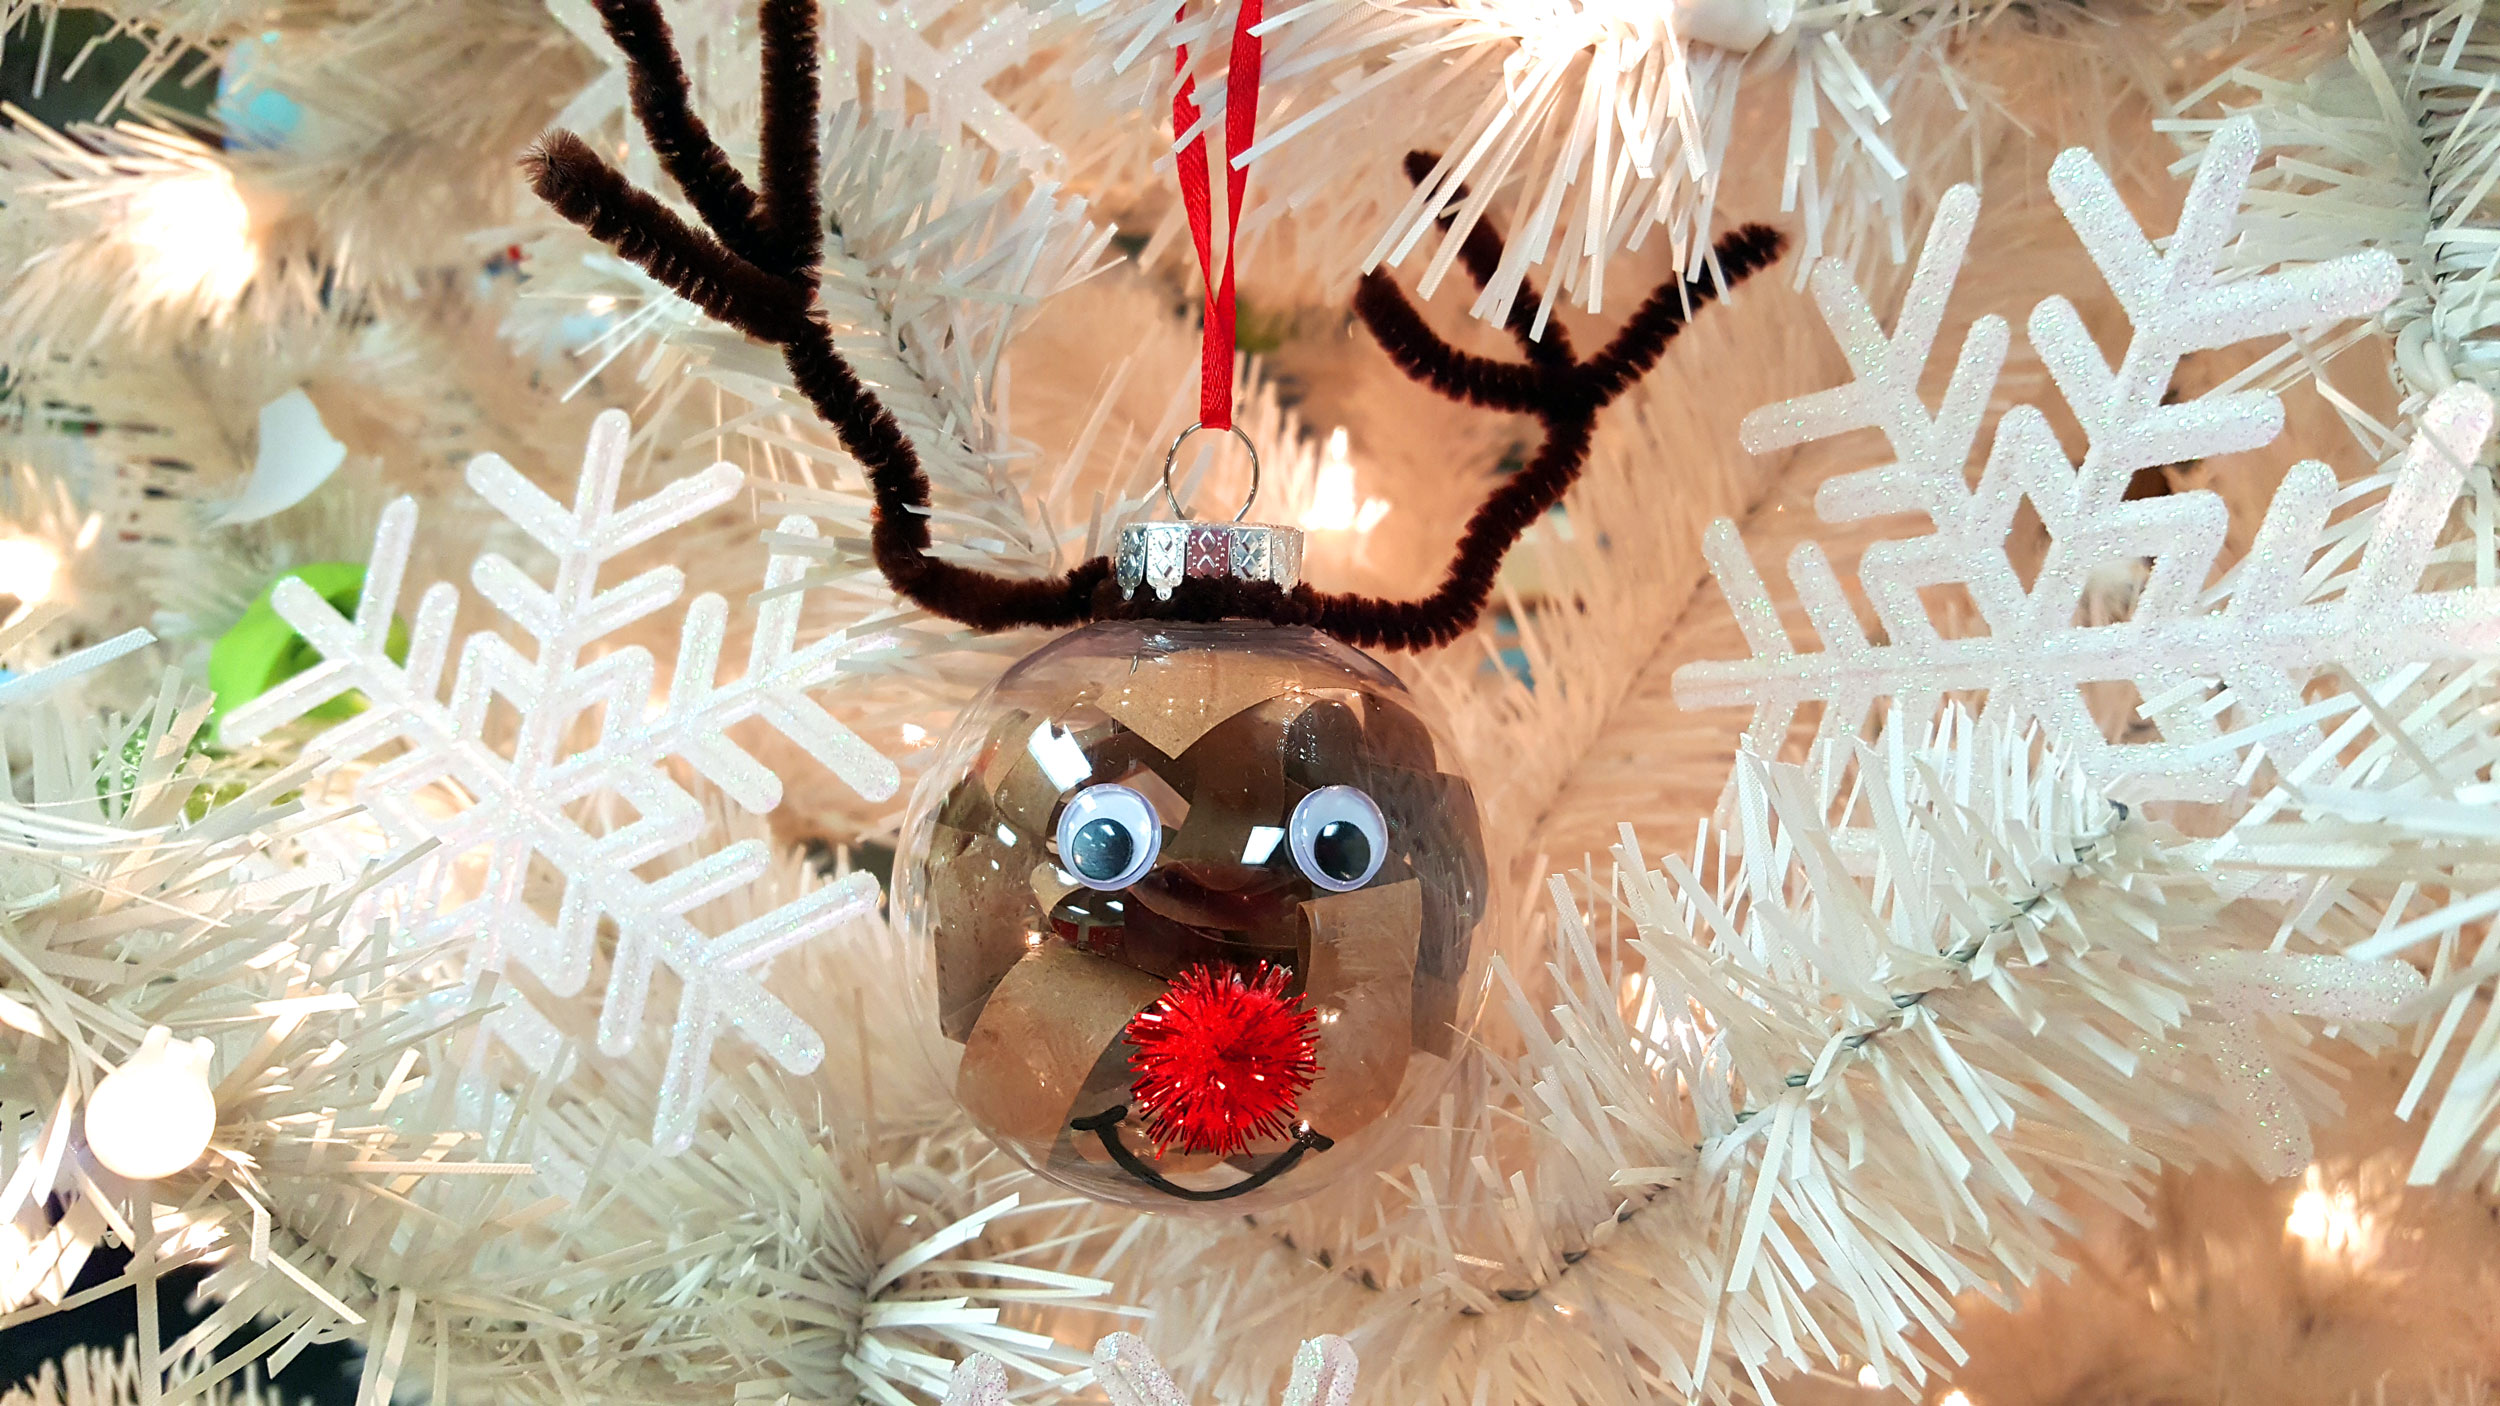 Completed Reindeer ornament hanging on a tree. | OrnamentShop.com